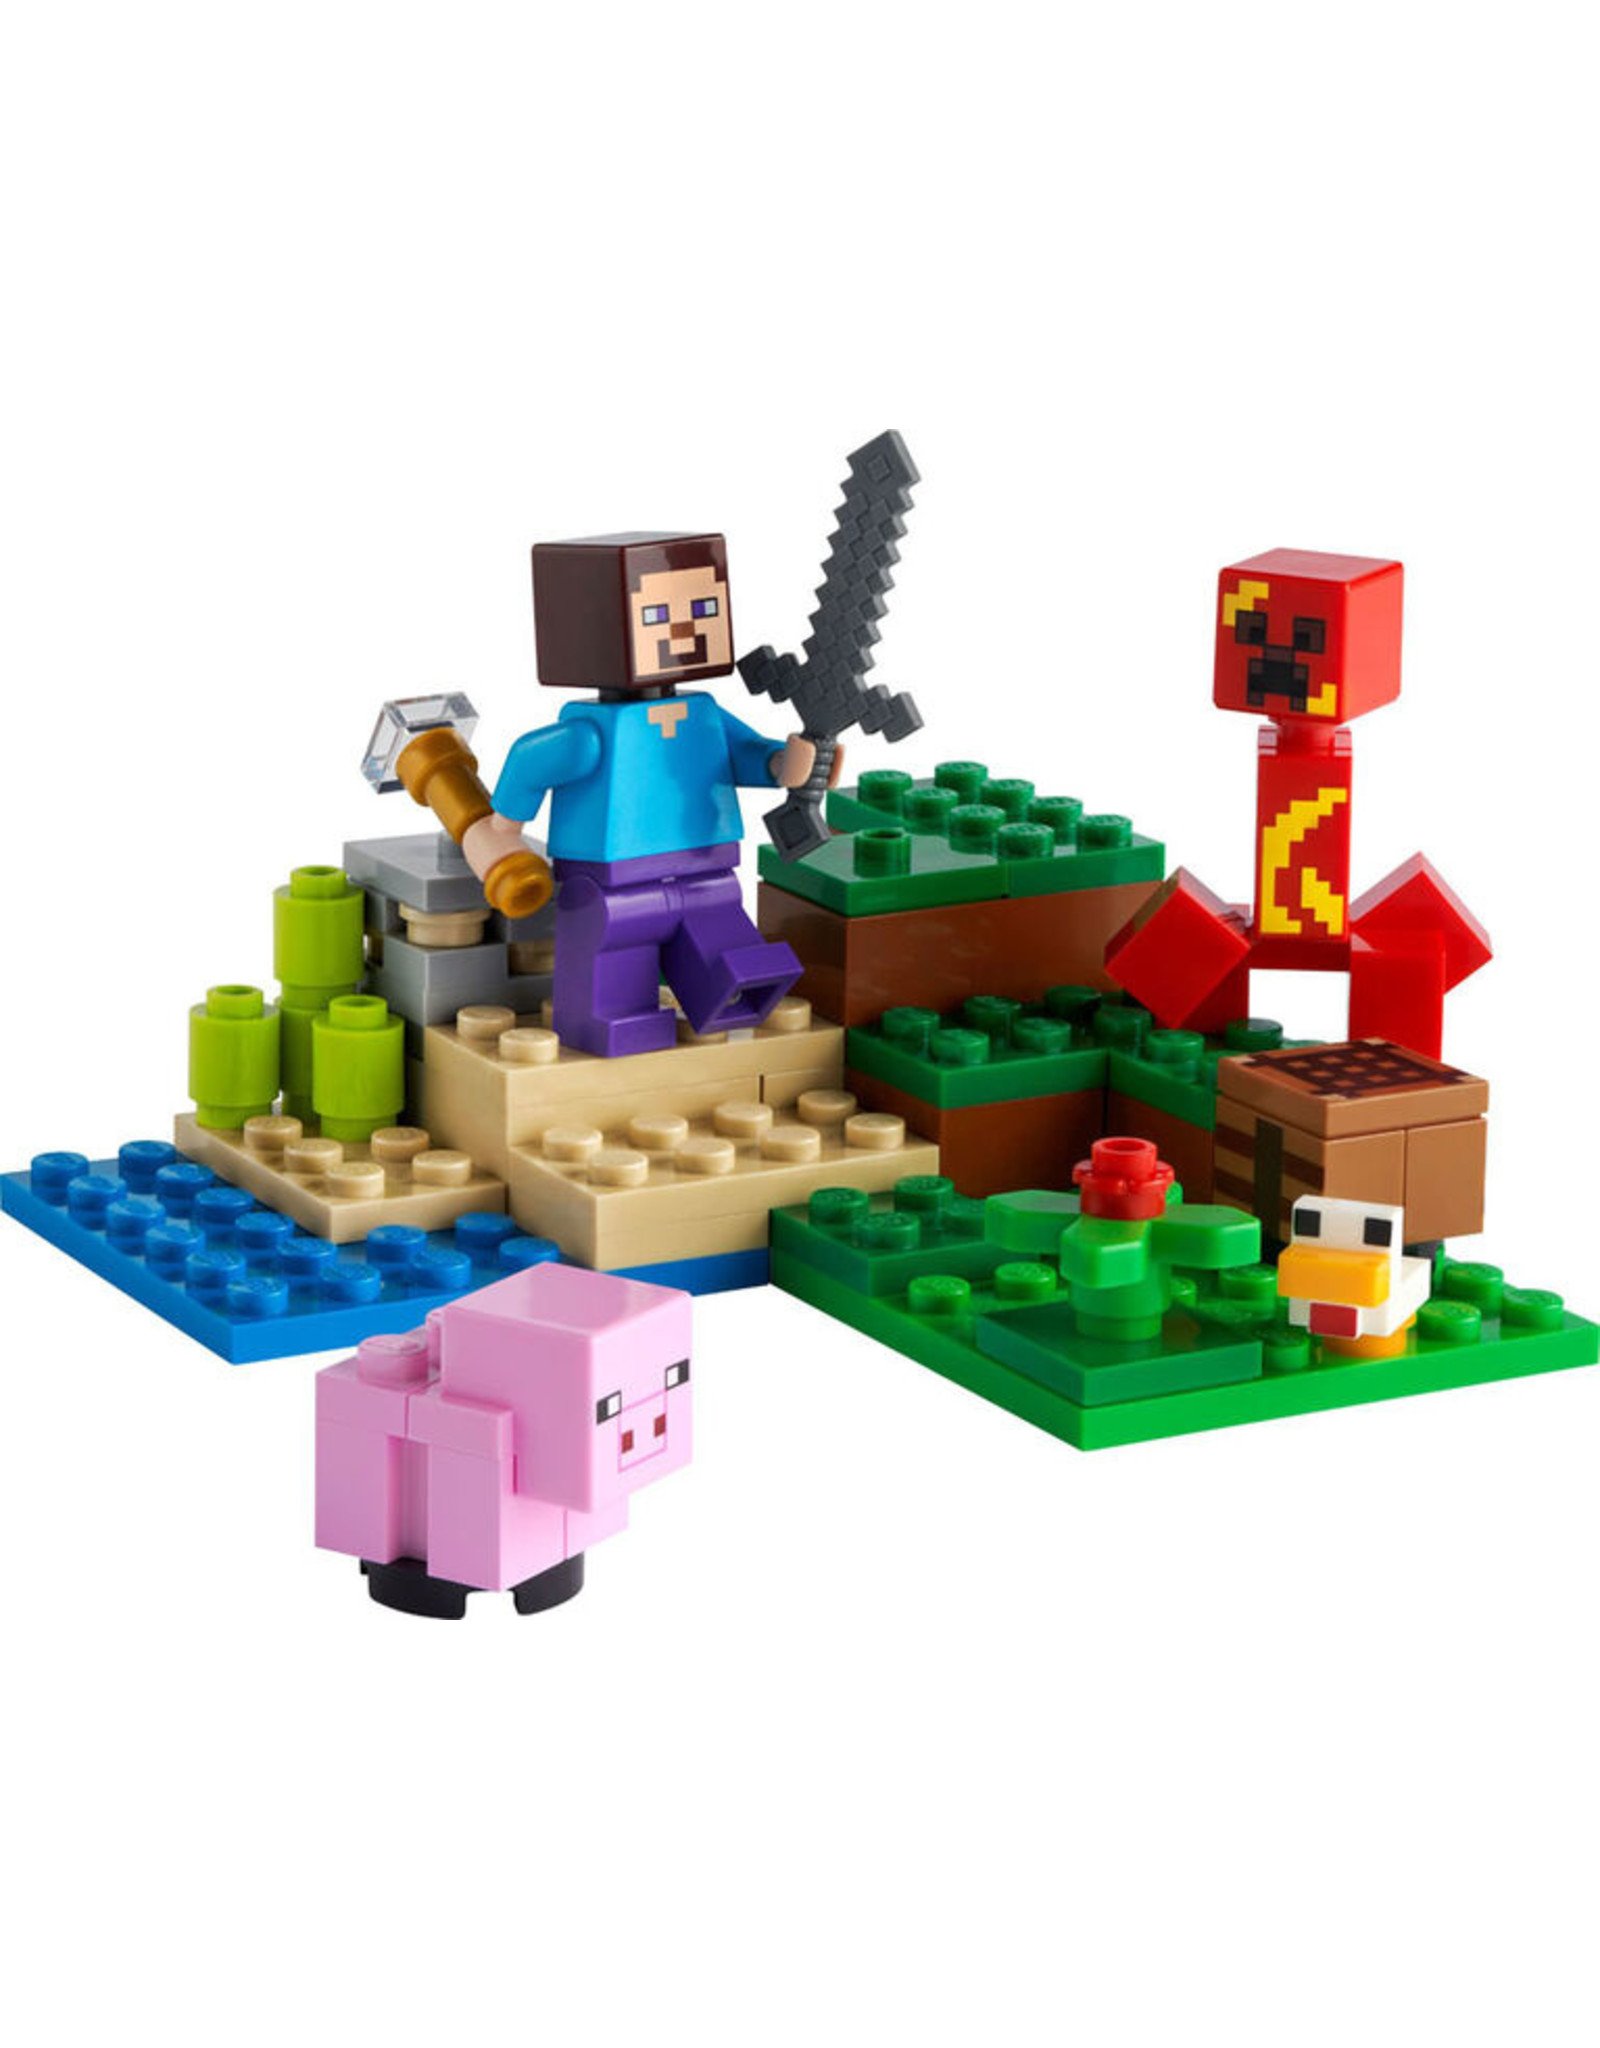 LEGO Minecraft The Creeper Ambush 21177 Building Kit (72 Pieces)